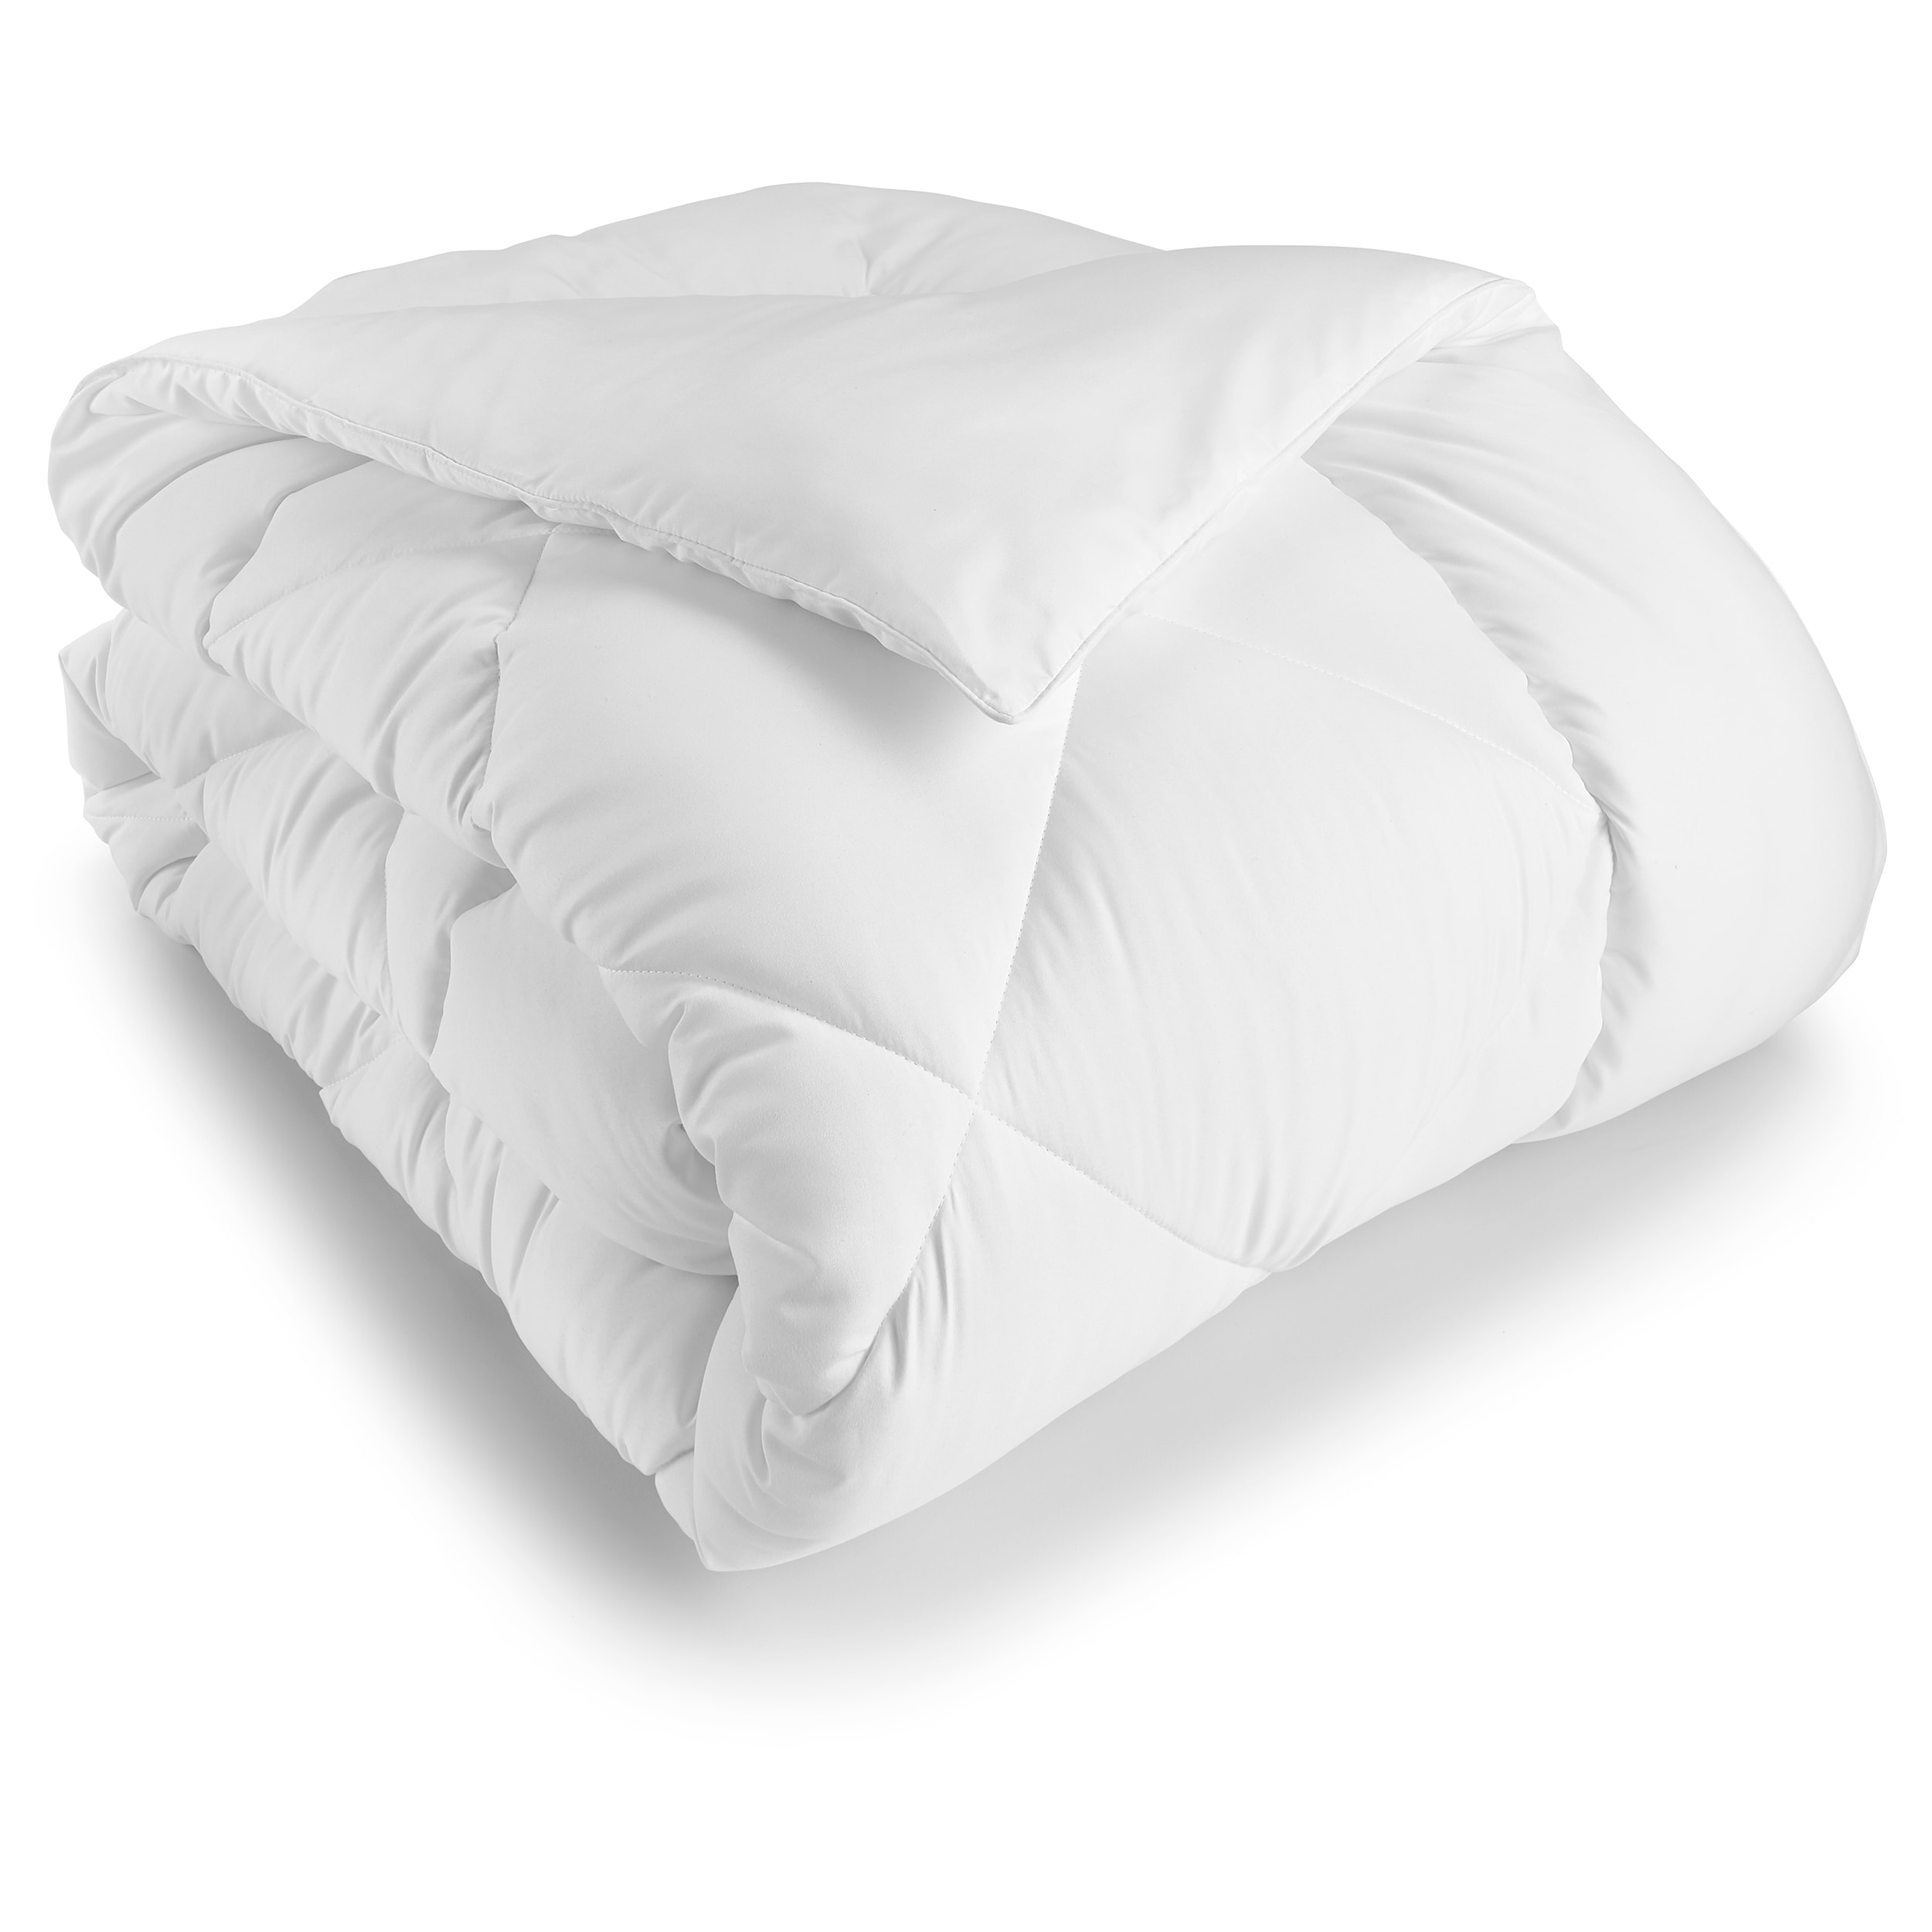 Comforter Comforters & Bedspreads at Lowes.com